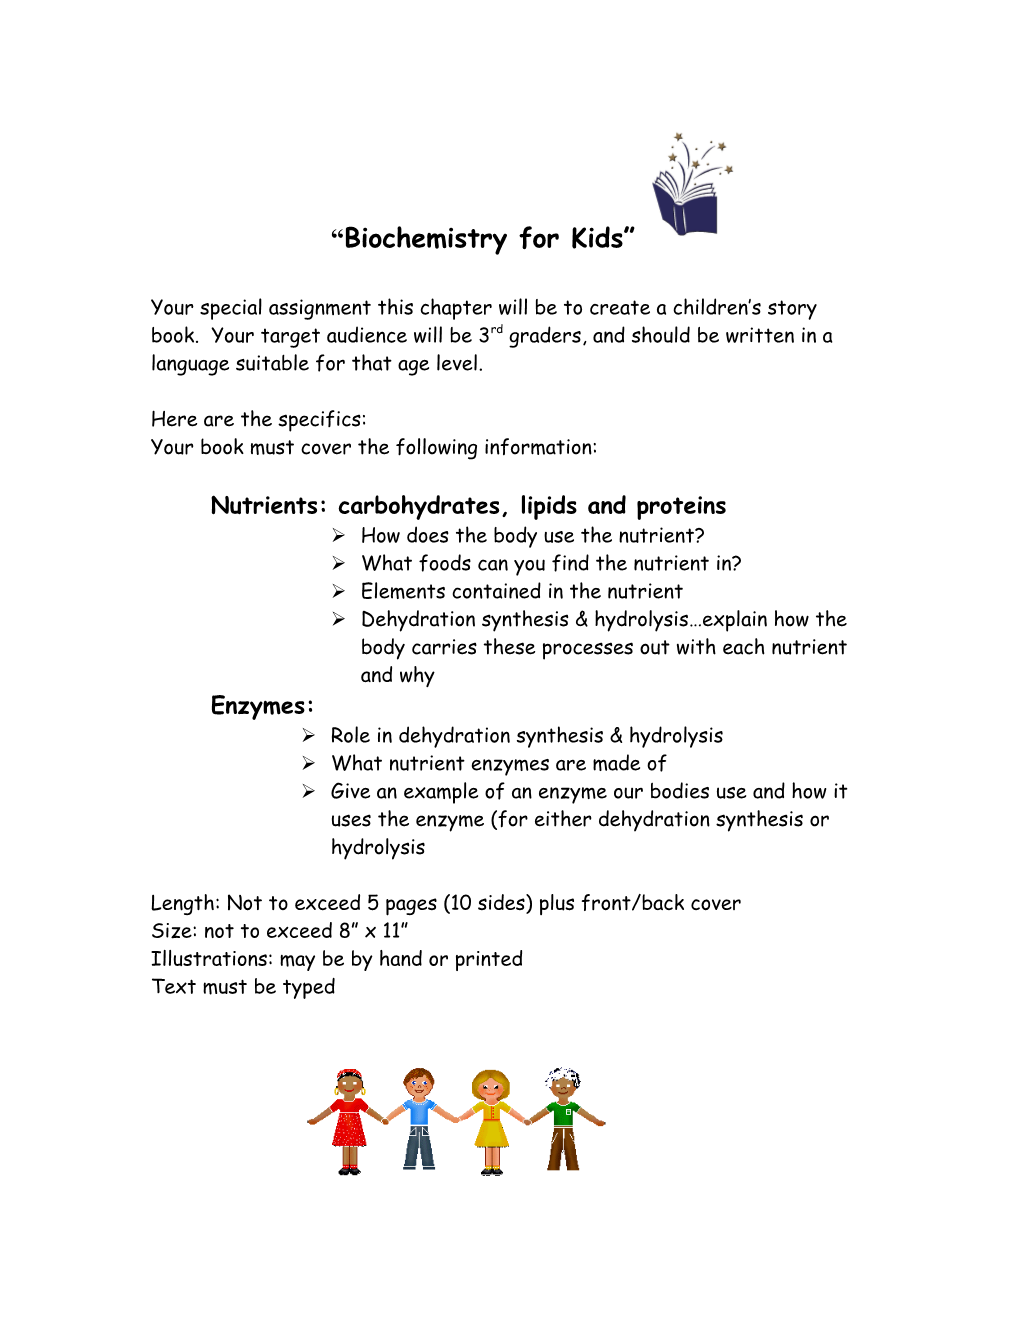 Biochemistry for Kids